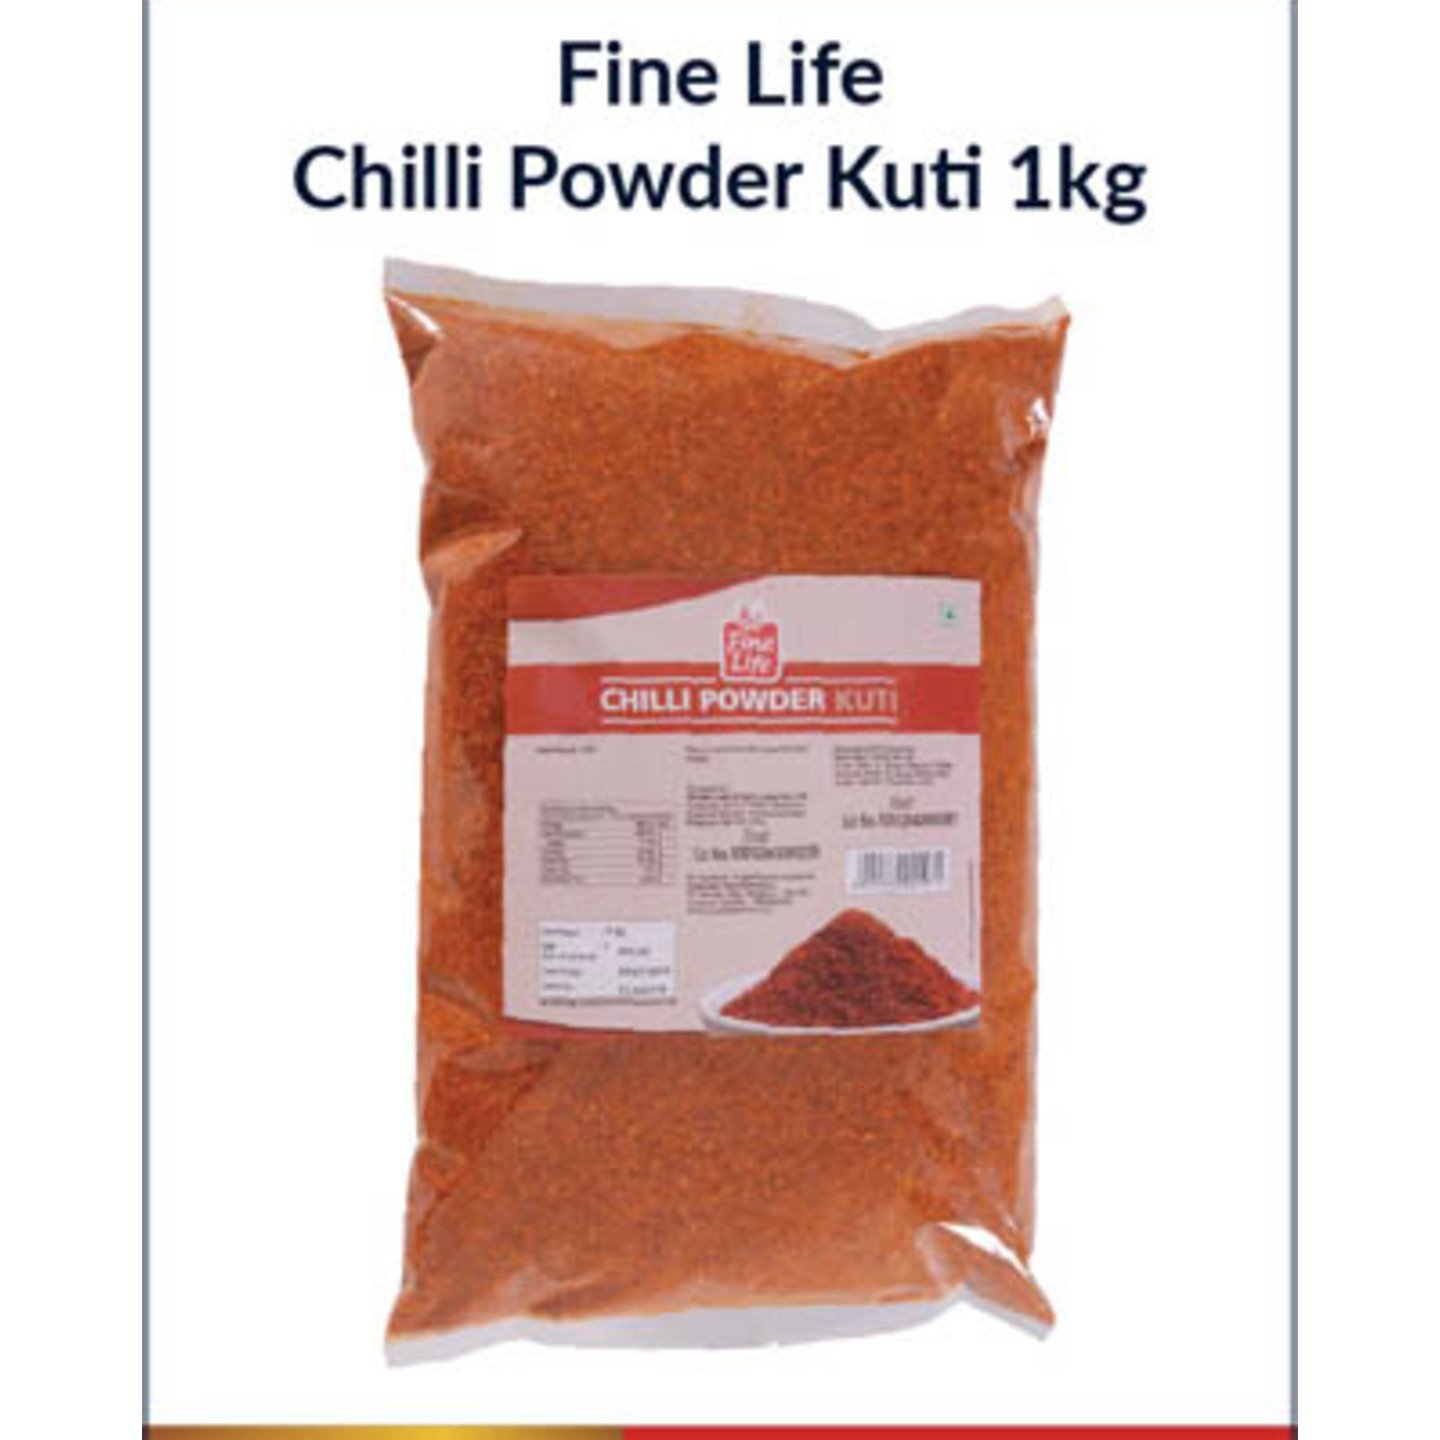 Fine Life Chilli Powder Kuti 1 KG